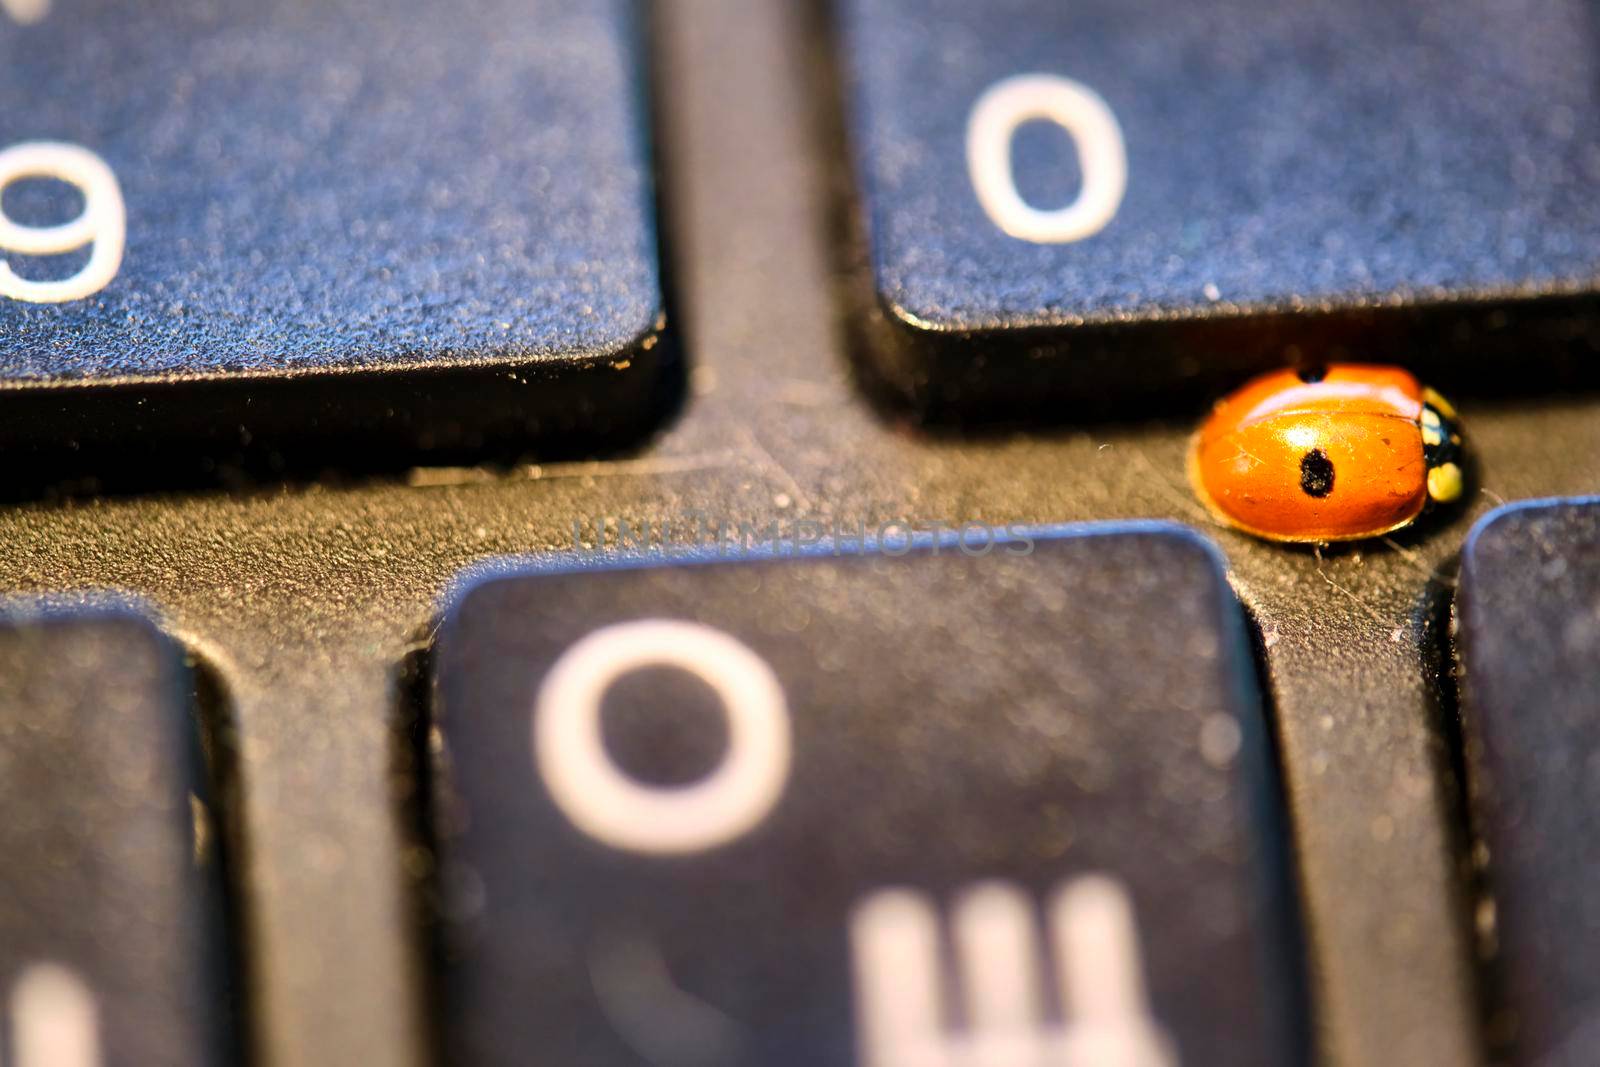 A ladybug sits on a computer keyboard